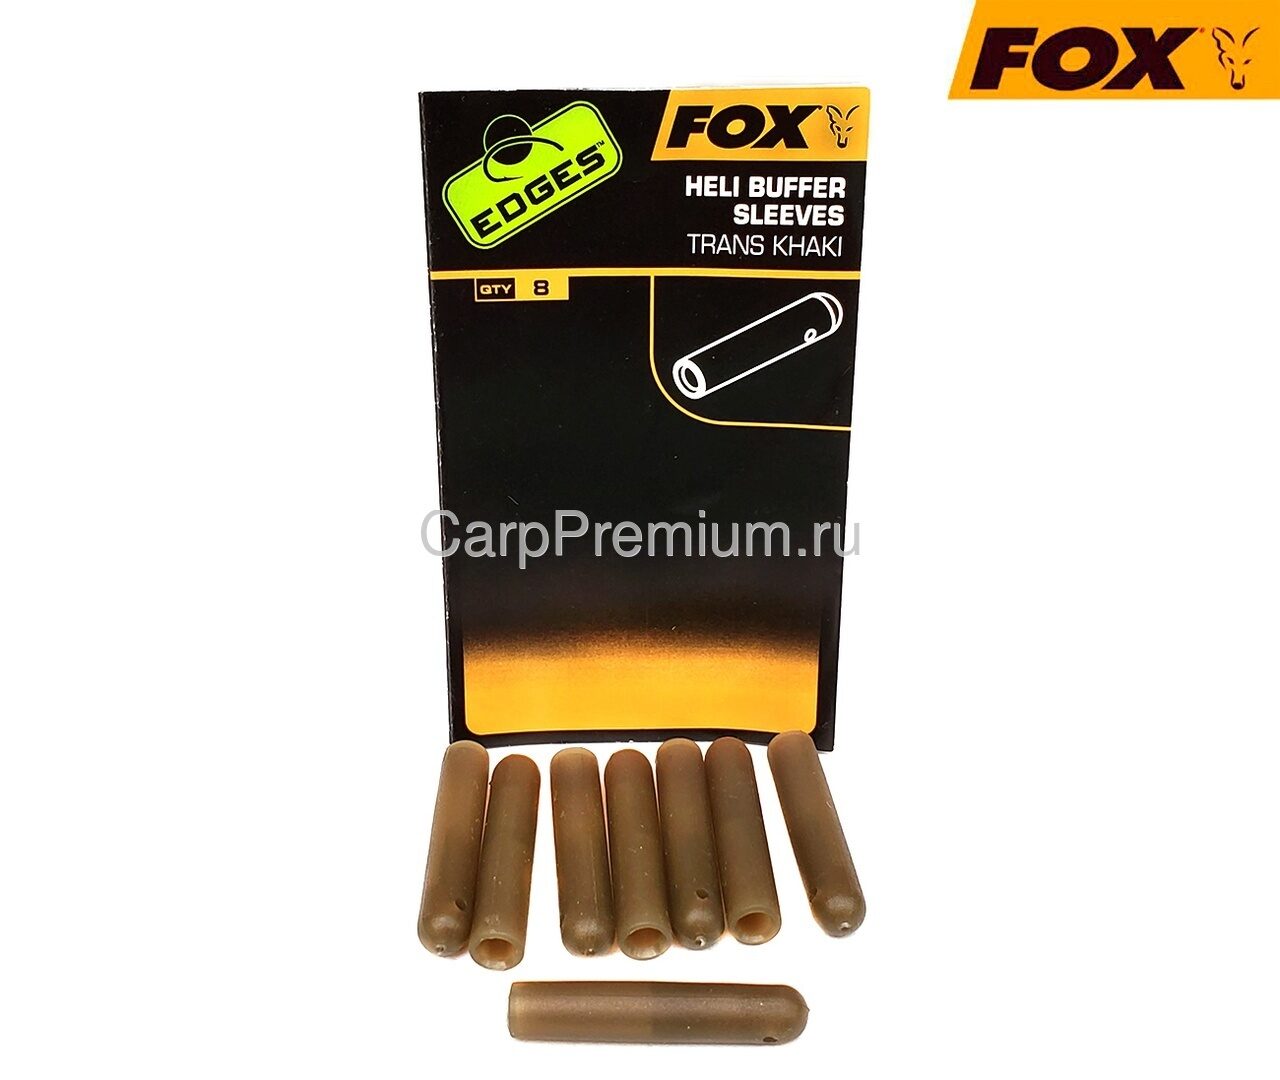 Буферные втулки для монтажей Fox (Фокс) - EDGES Heli Buffer Sleeve Trans Khaki, 8 шт